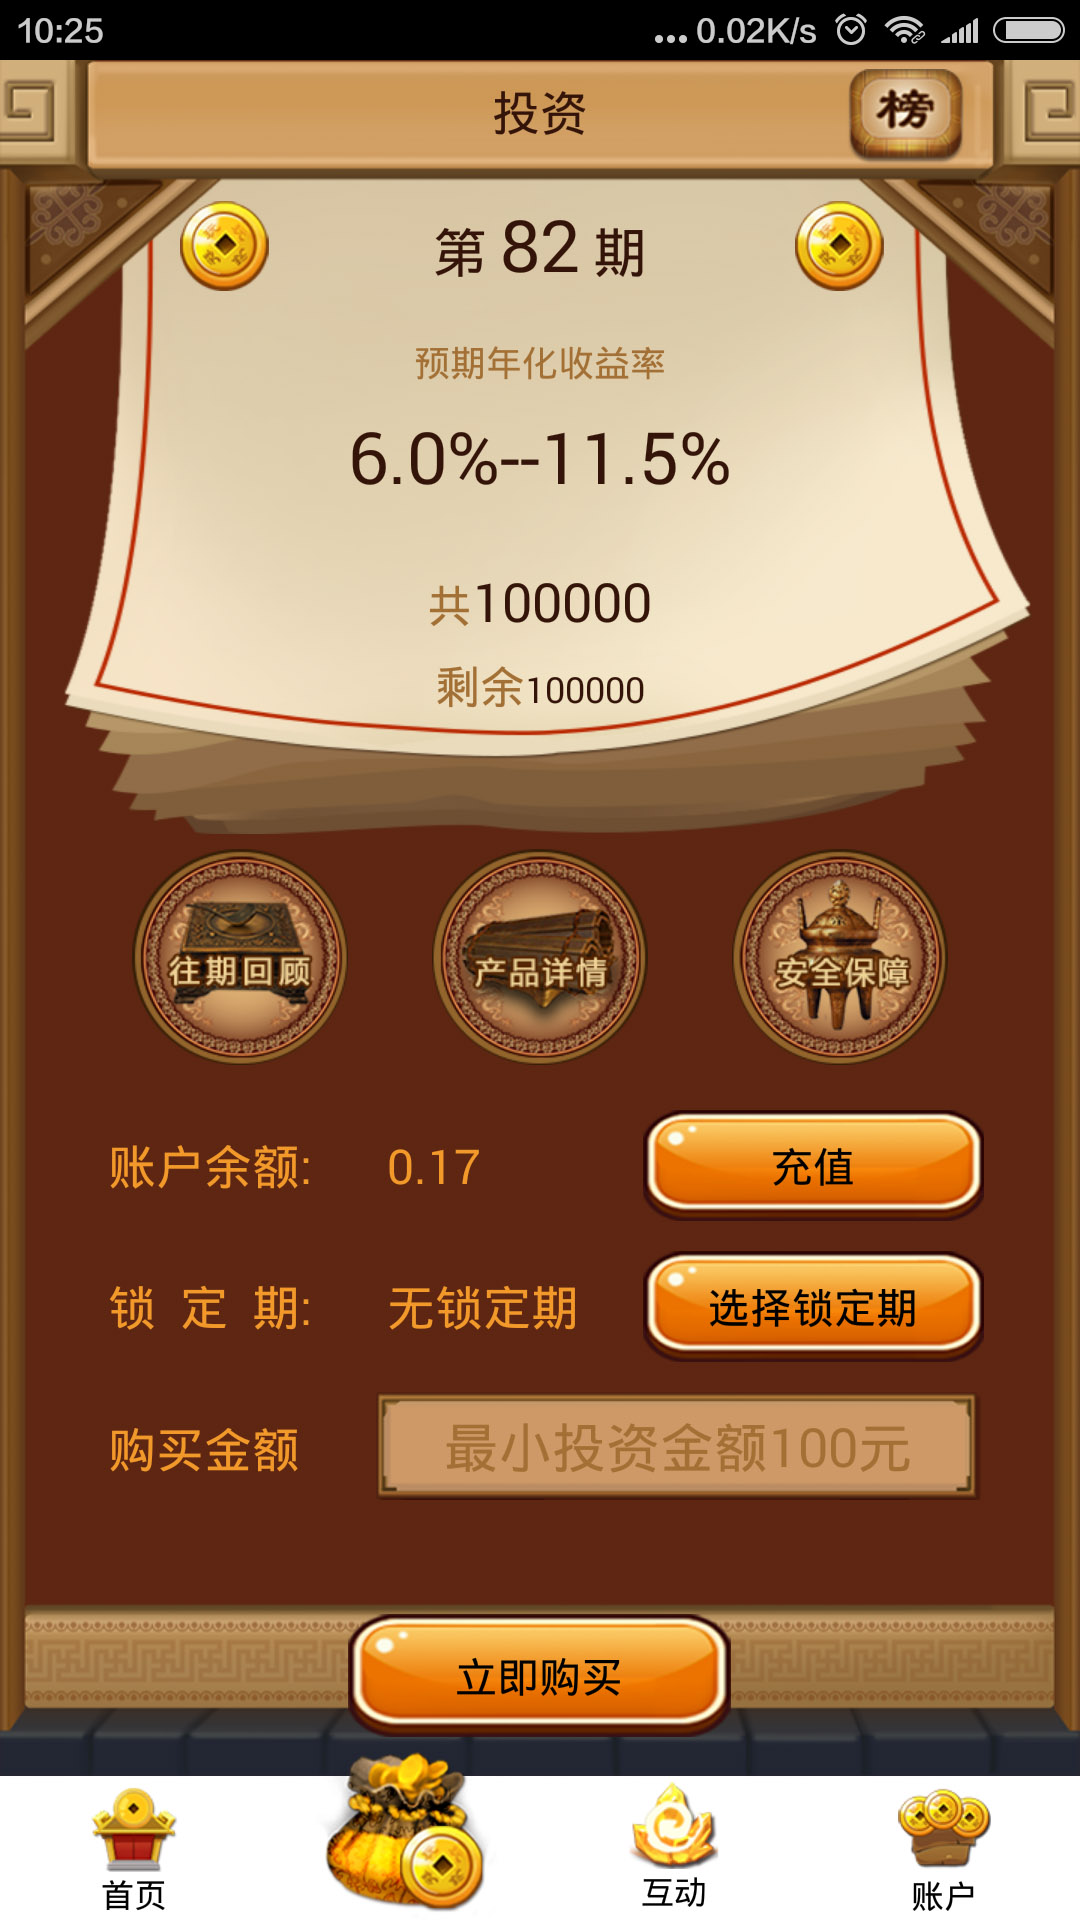 Screenshot 2016 03 03 10 25 28 com.yidianfu.playm